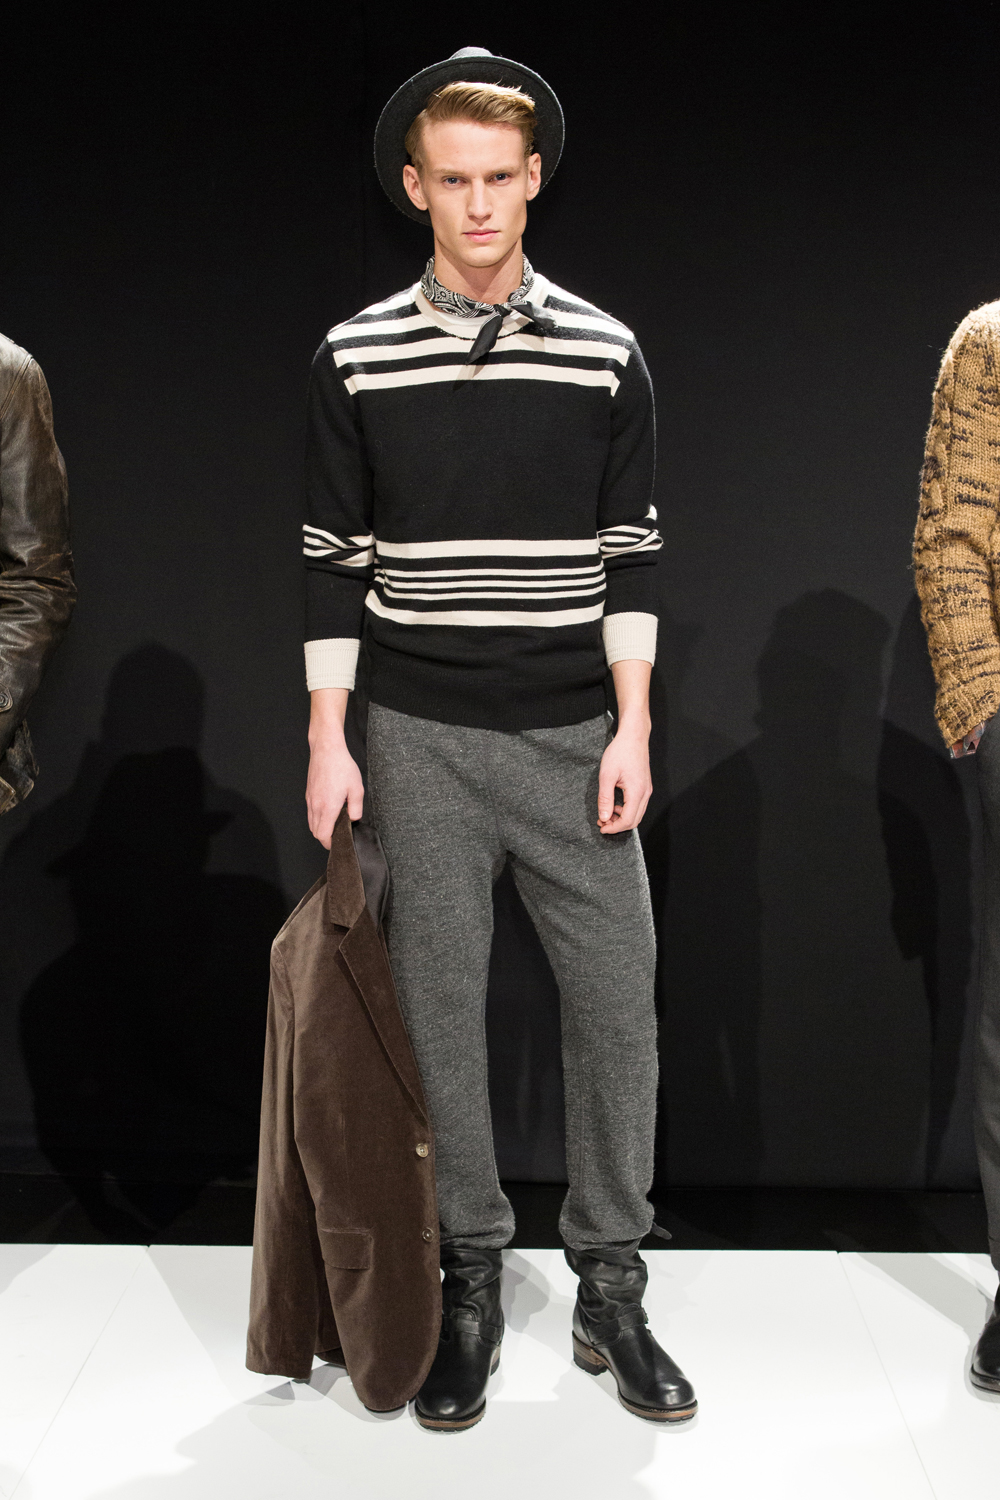 Todd Snyder Fall/Winter 2013 | New York Fashion Week – The Fashionisto